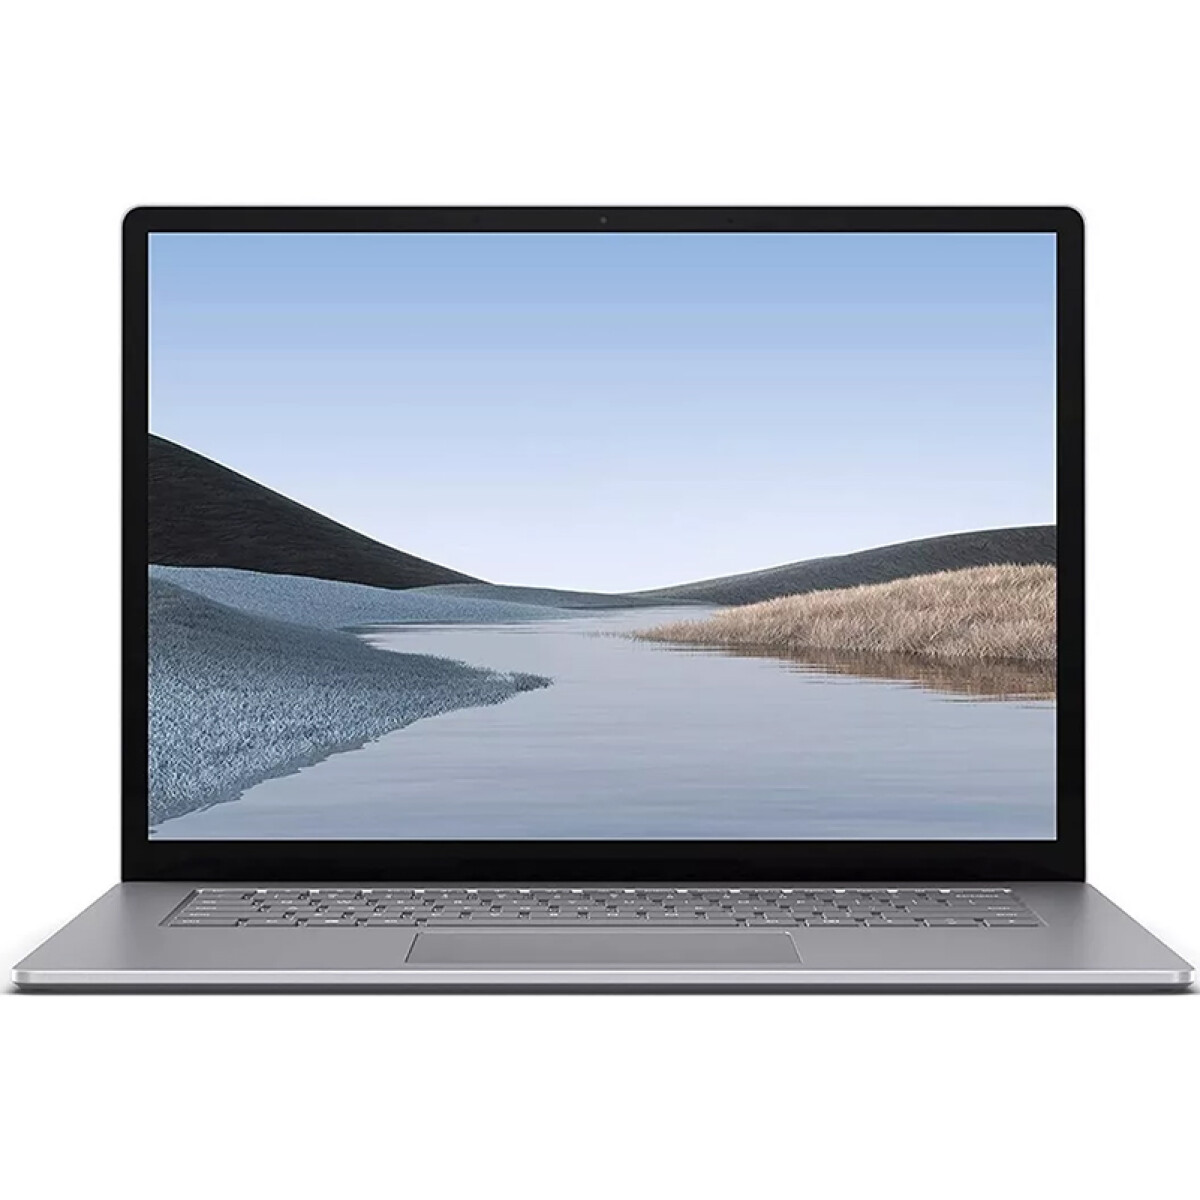 Notebook Microsoft Surface i5-7200U 128GB 4GB 13.5" 